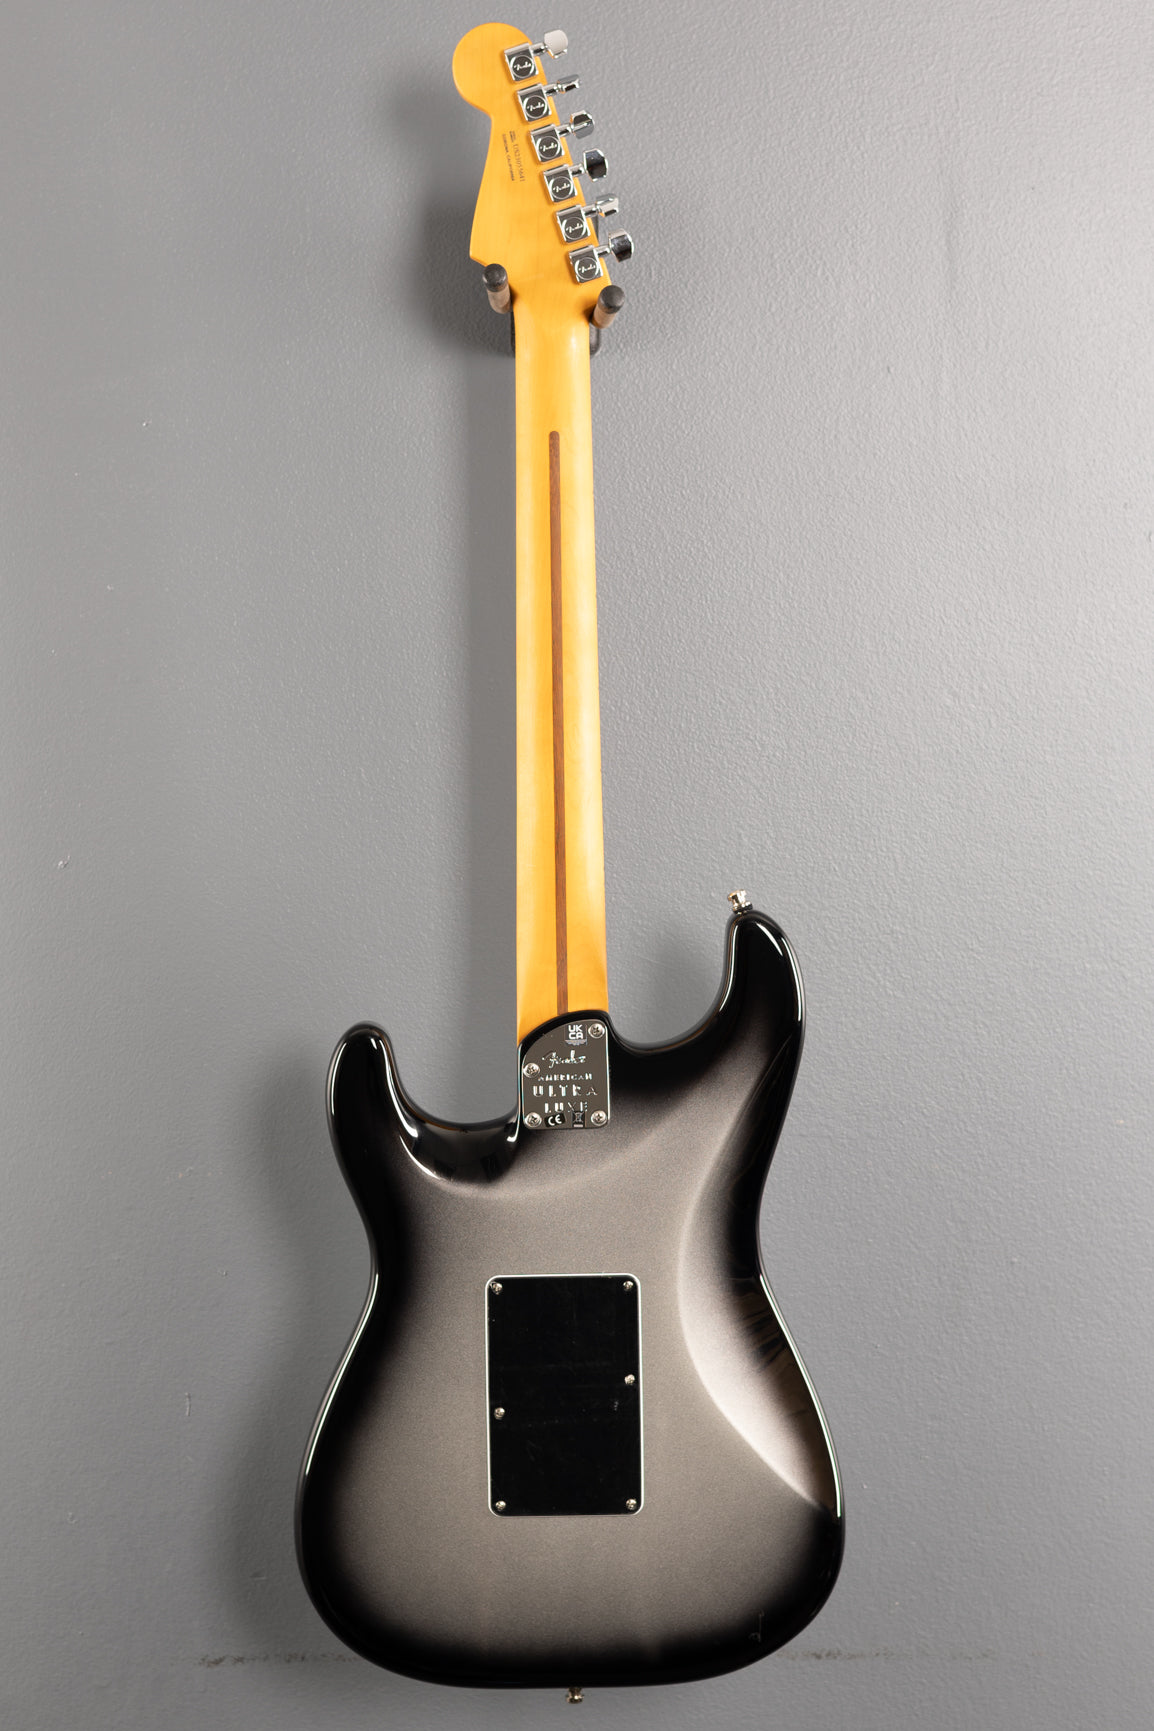 American Ultra Luxe Stratocaster Floyd Rose HSS - Silverburst